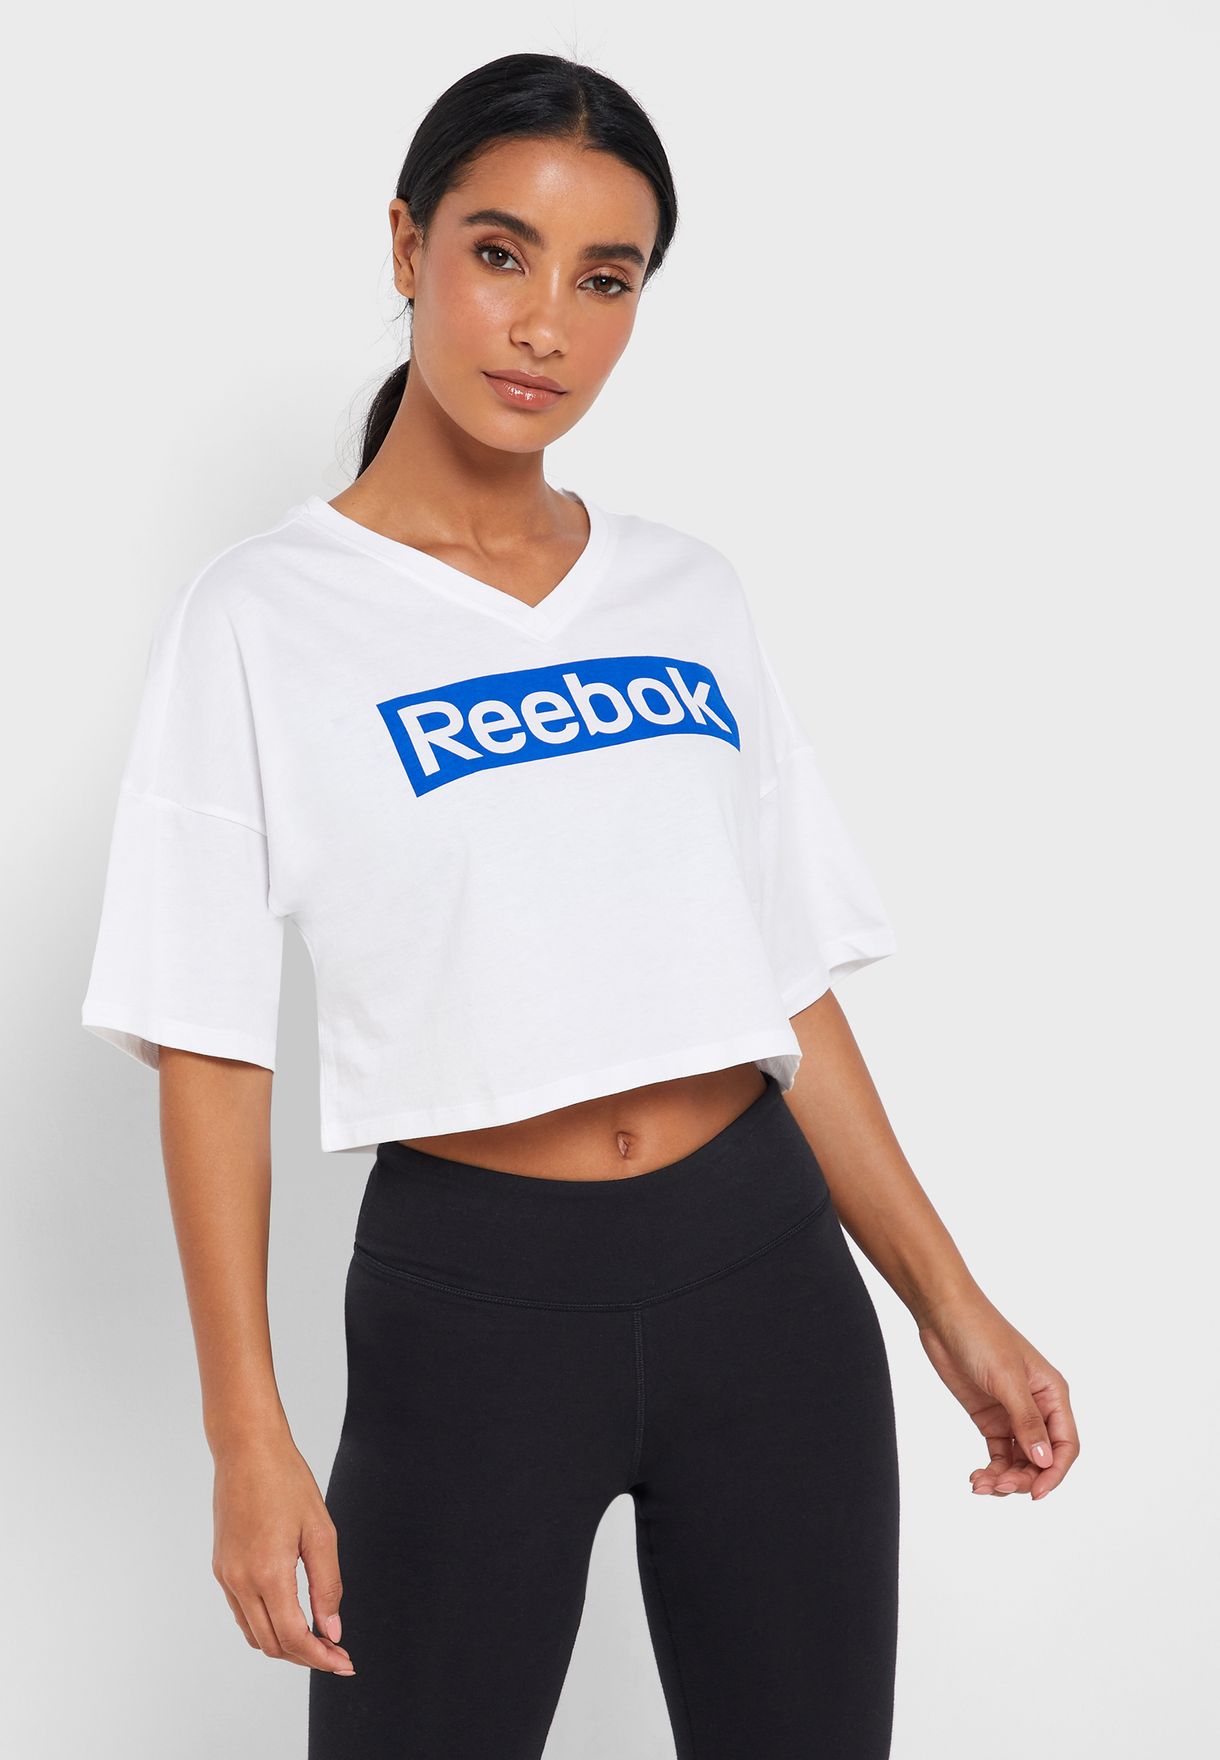 reebok t shirts for ladies